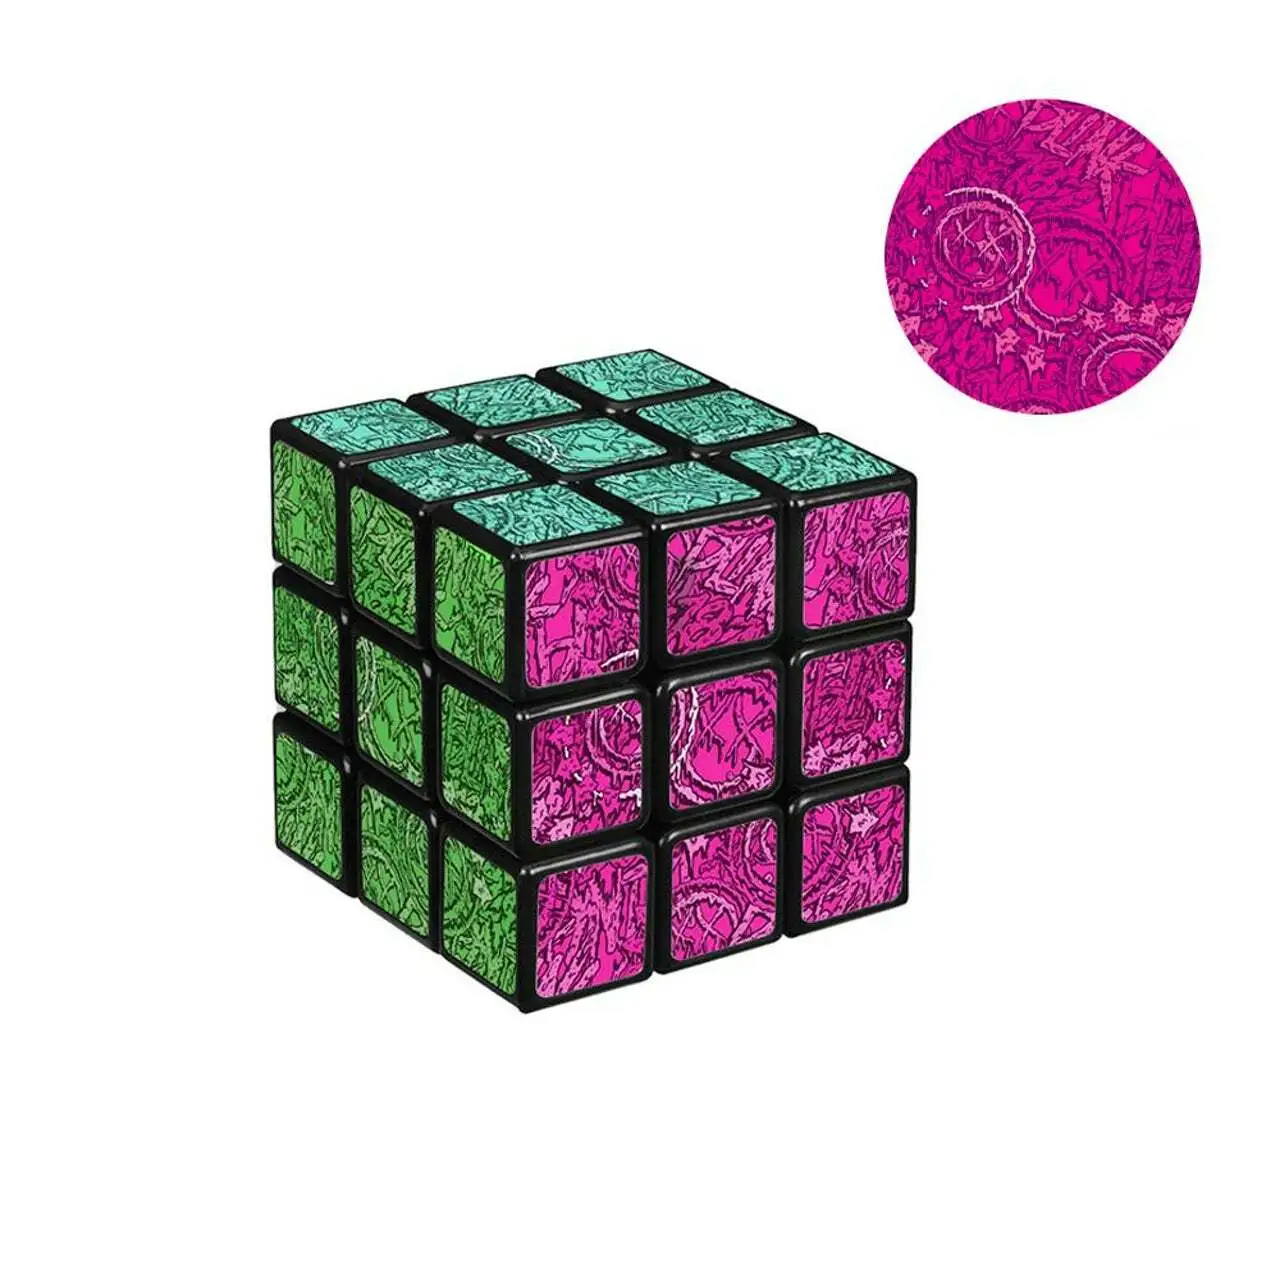 Blink 182 Rubix Cube 